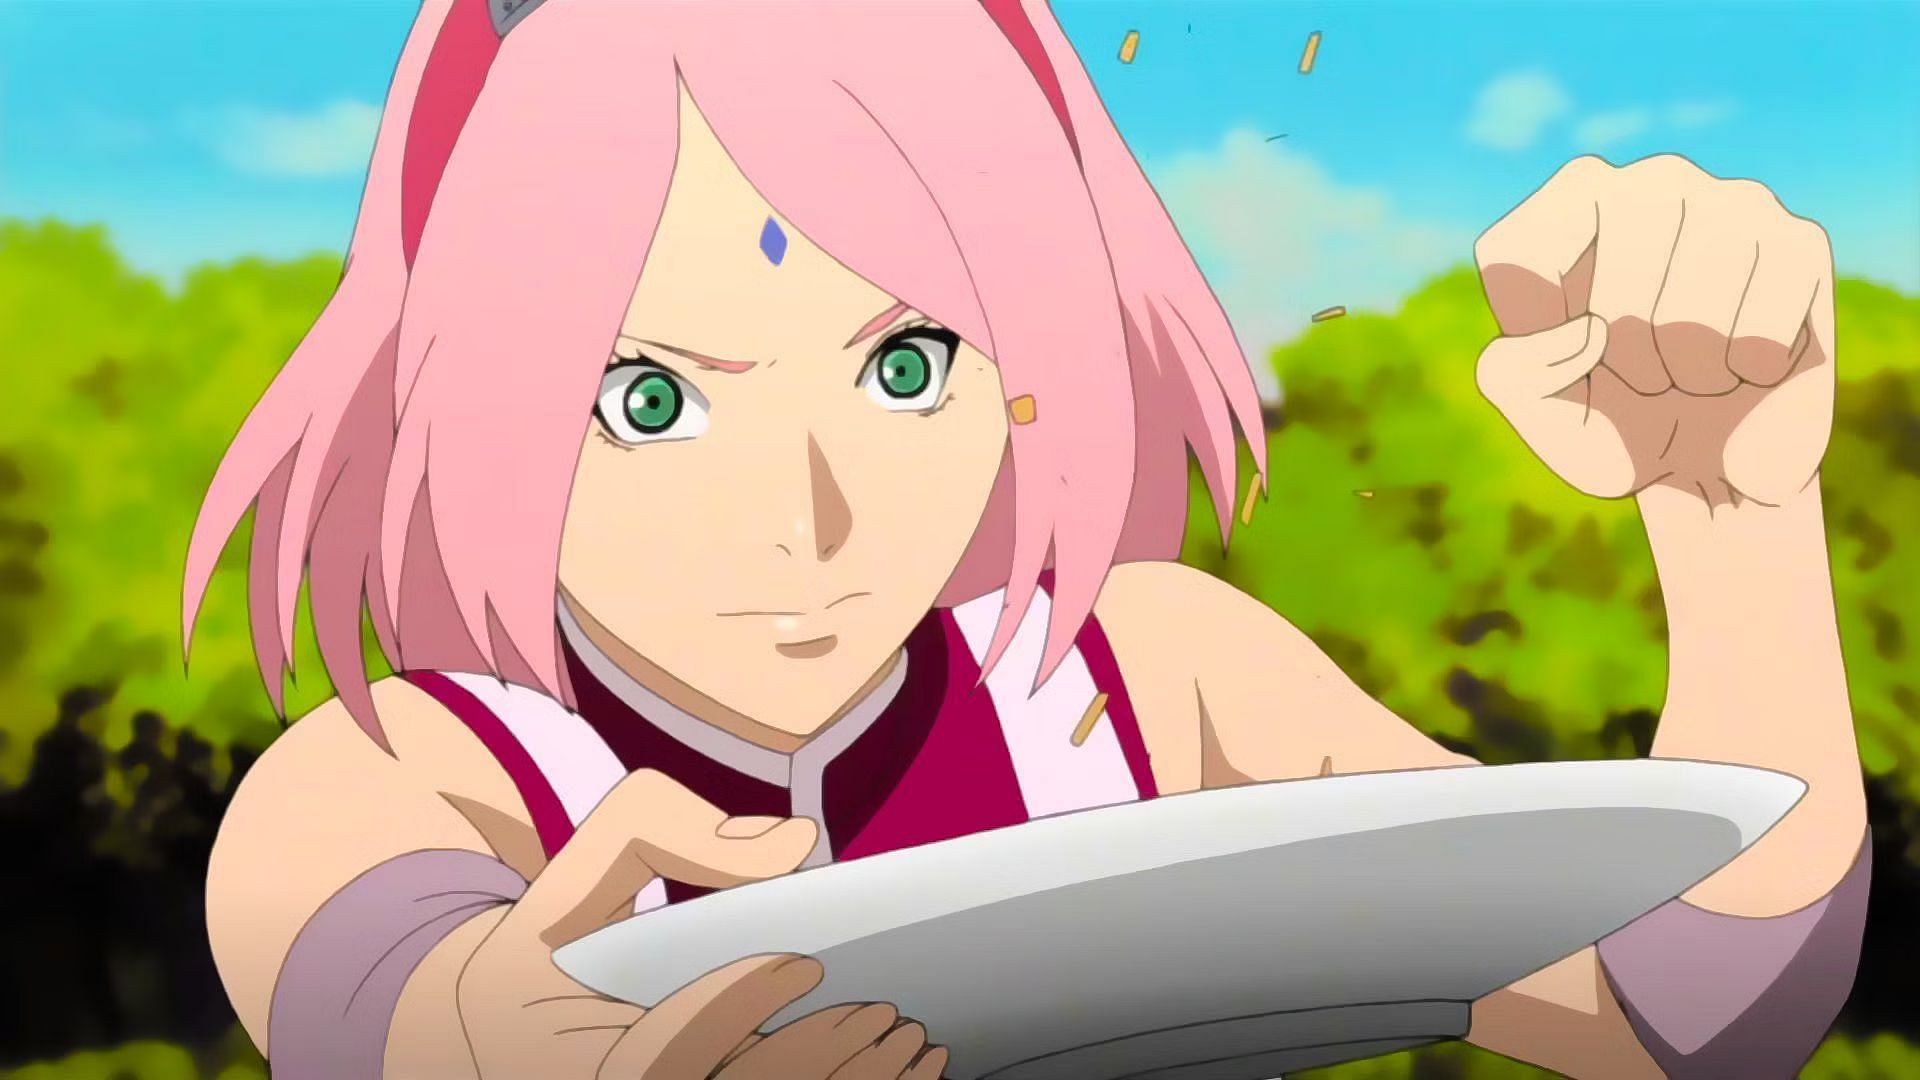 Sakura as seen in the Naruto anime (image via Pierrot)